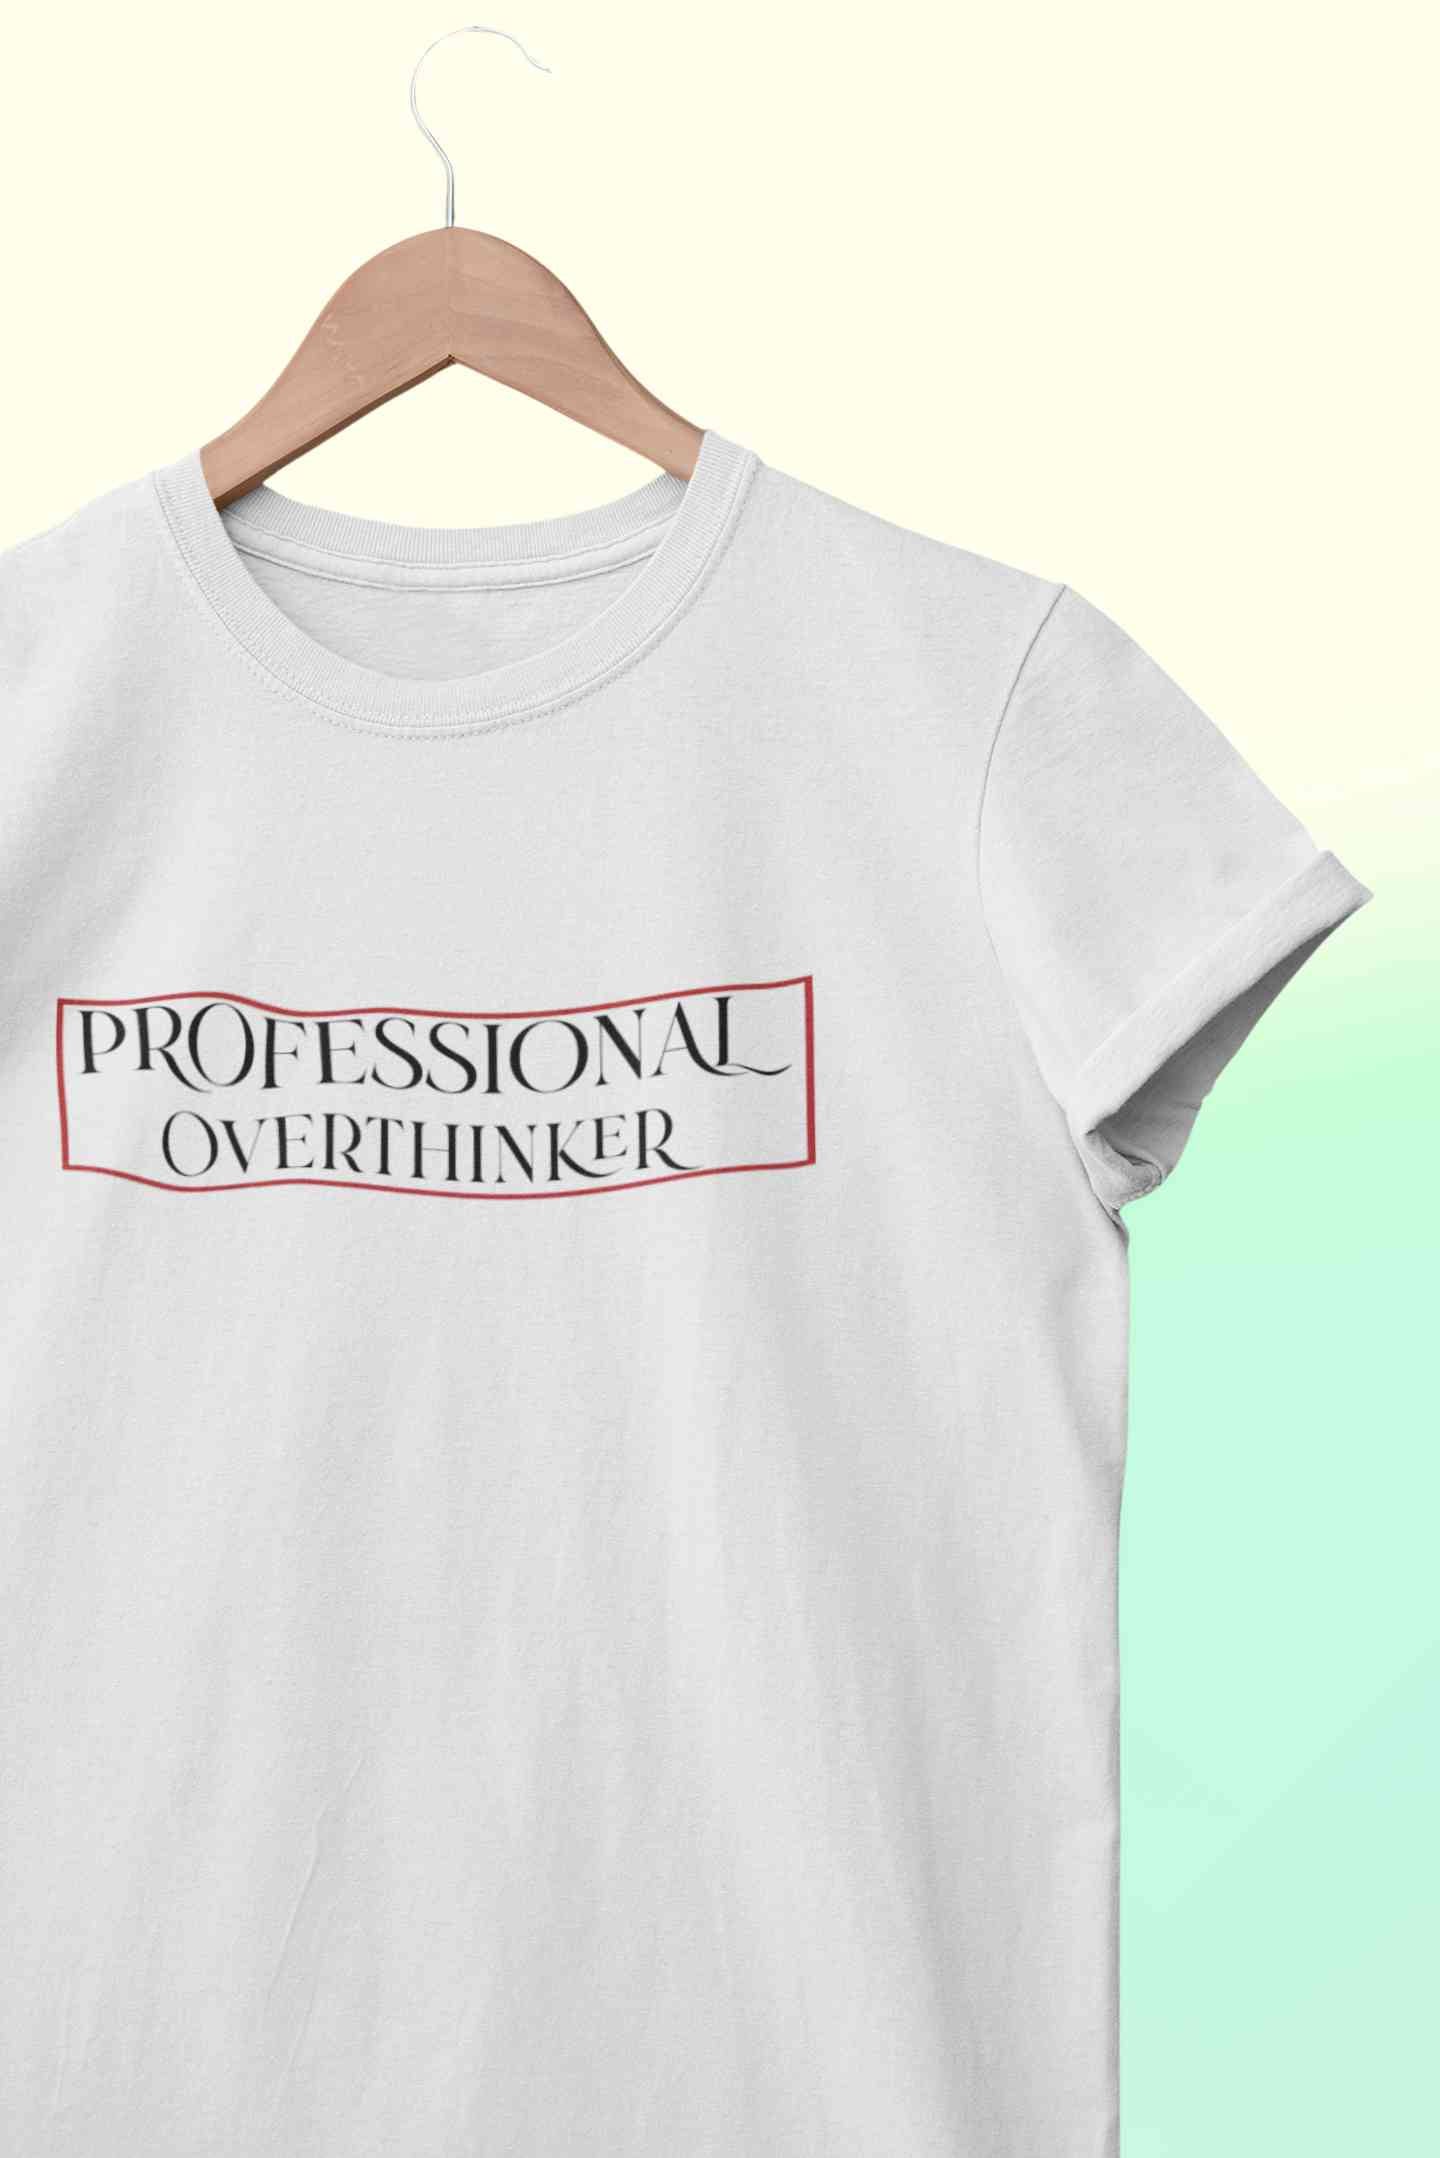 Professional Overthinker Women Half Sleeves T-shirt- FunkyTeesClub